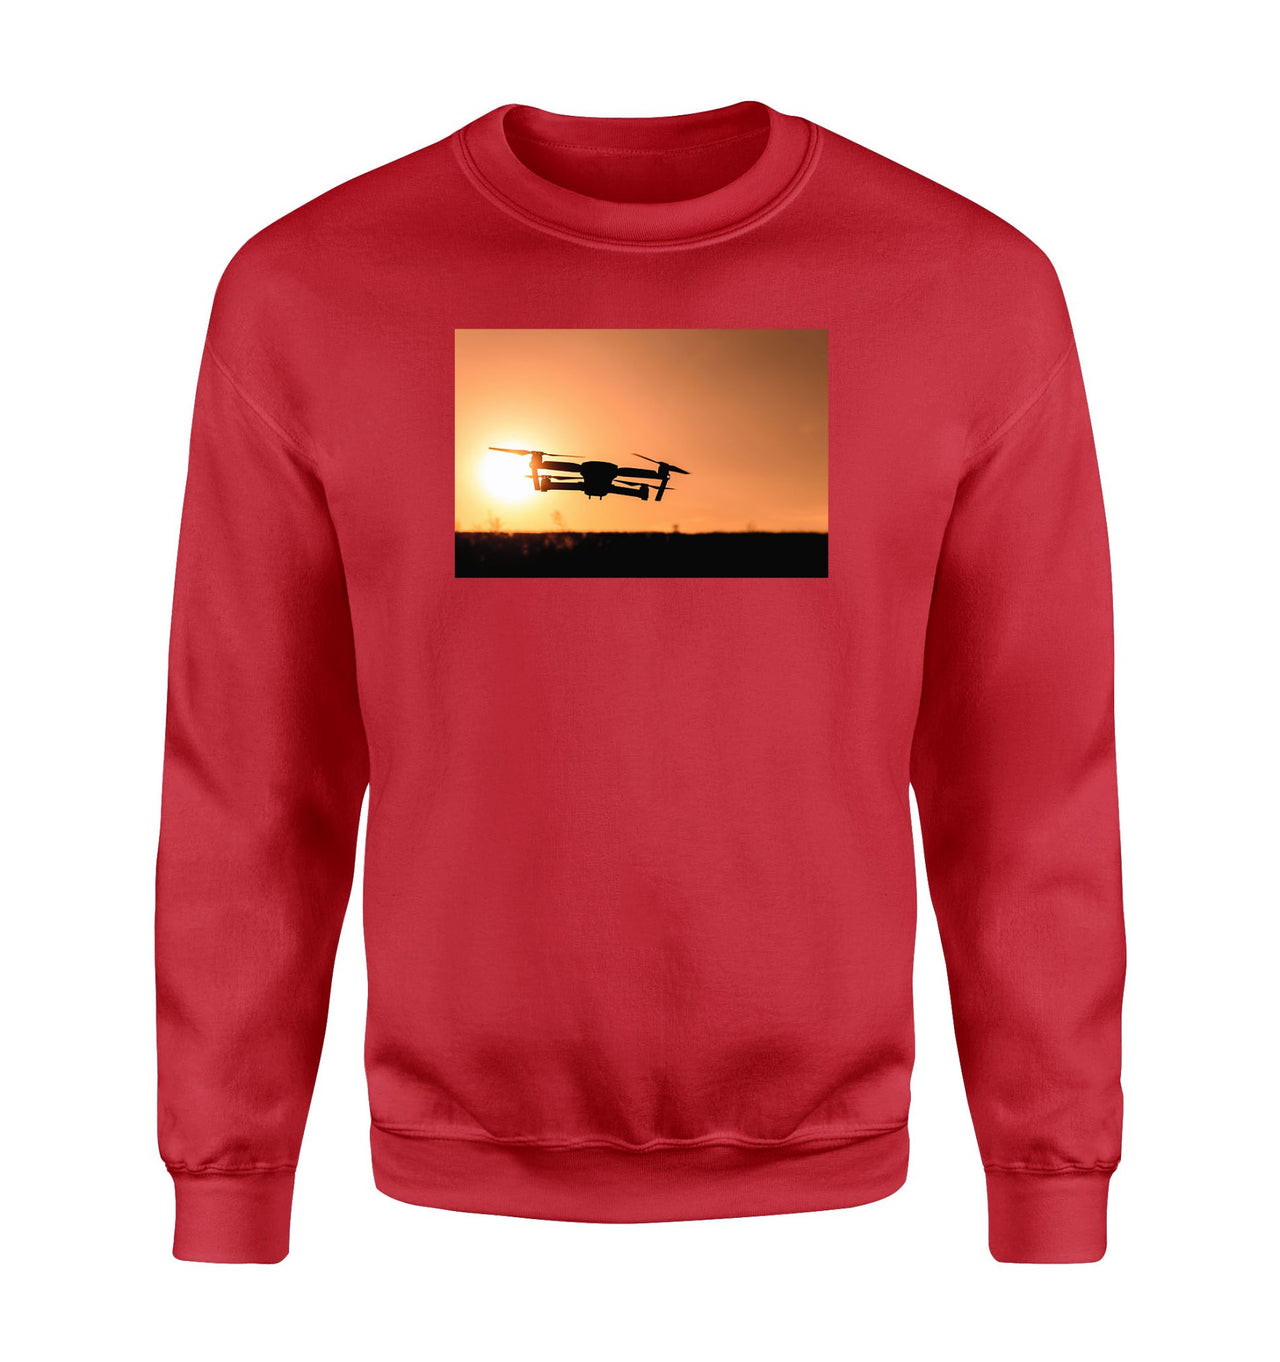 Amazing Drone in Sunset Designed Sweatshirts